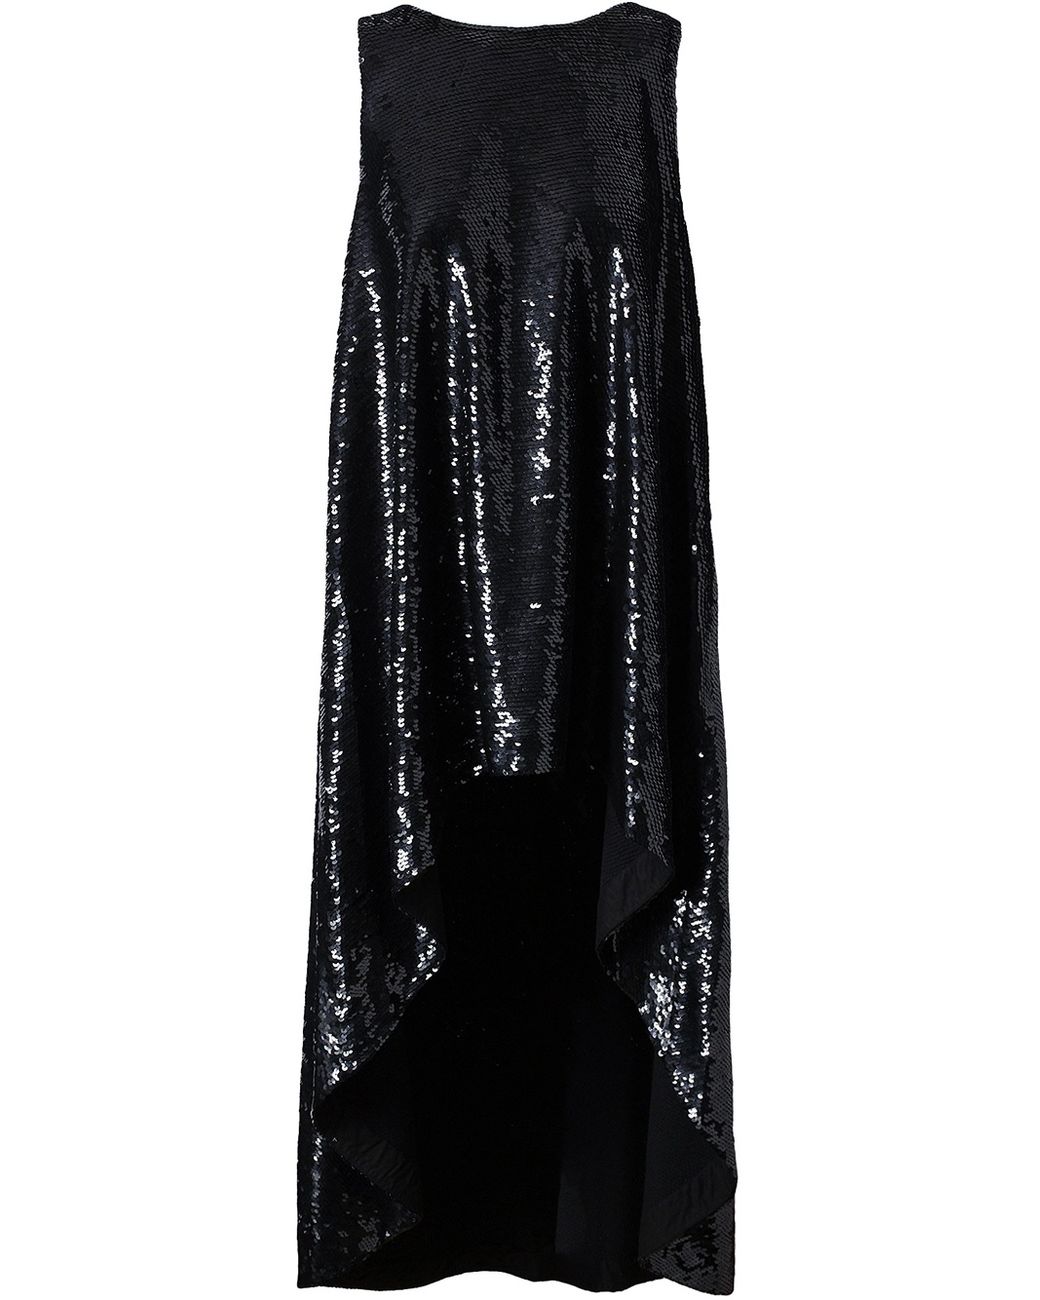 Ashish Sequin Embellished Trapeze Dress in Black | Lyst